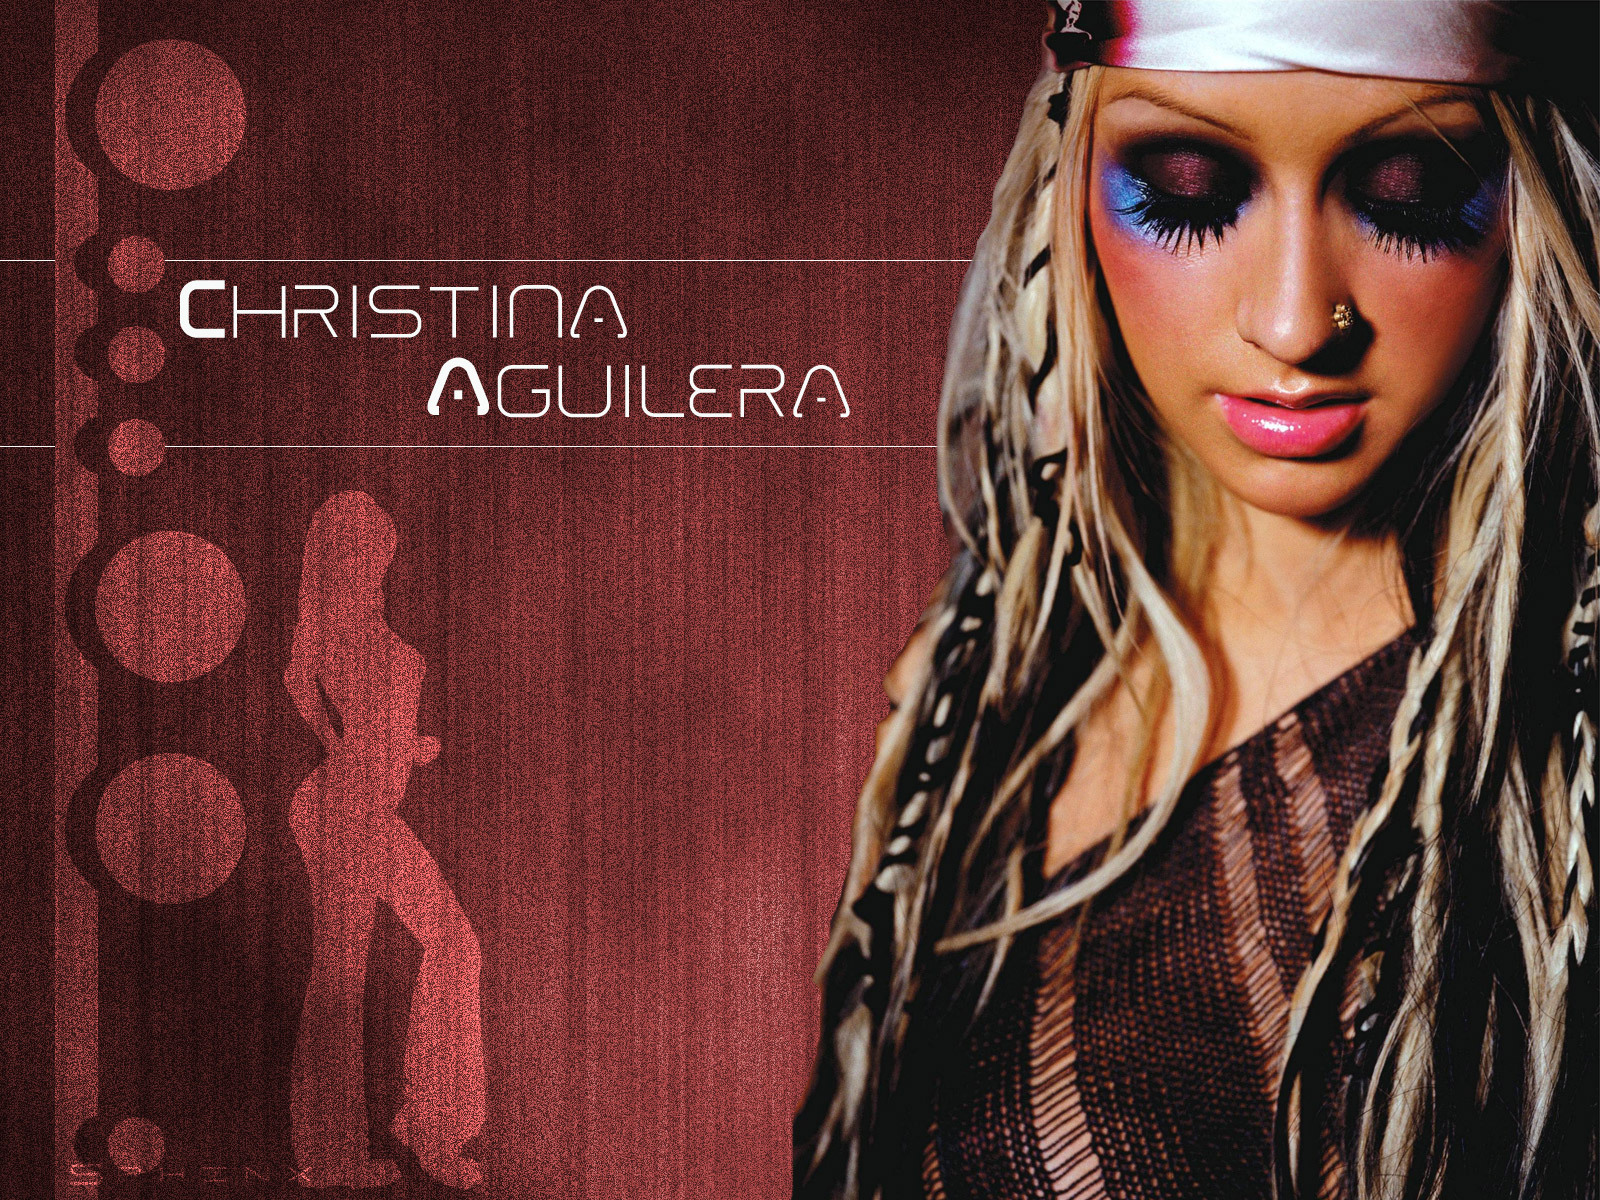 Christina Wallpaper Aguilera